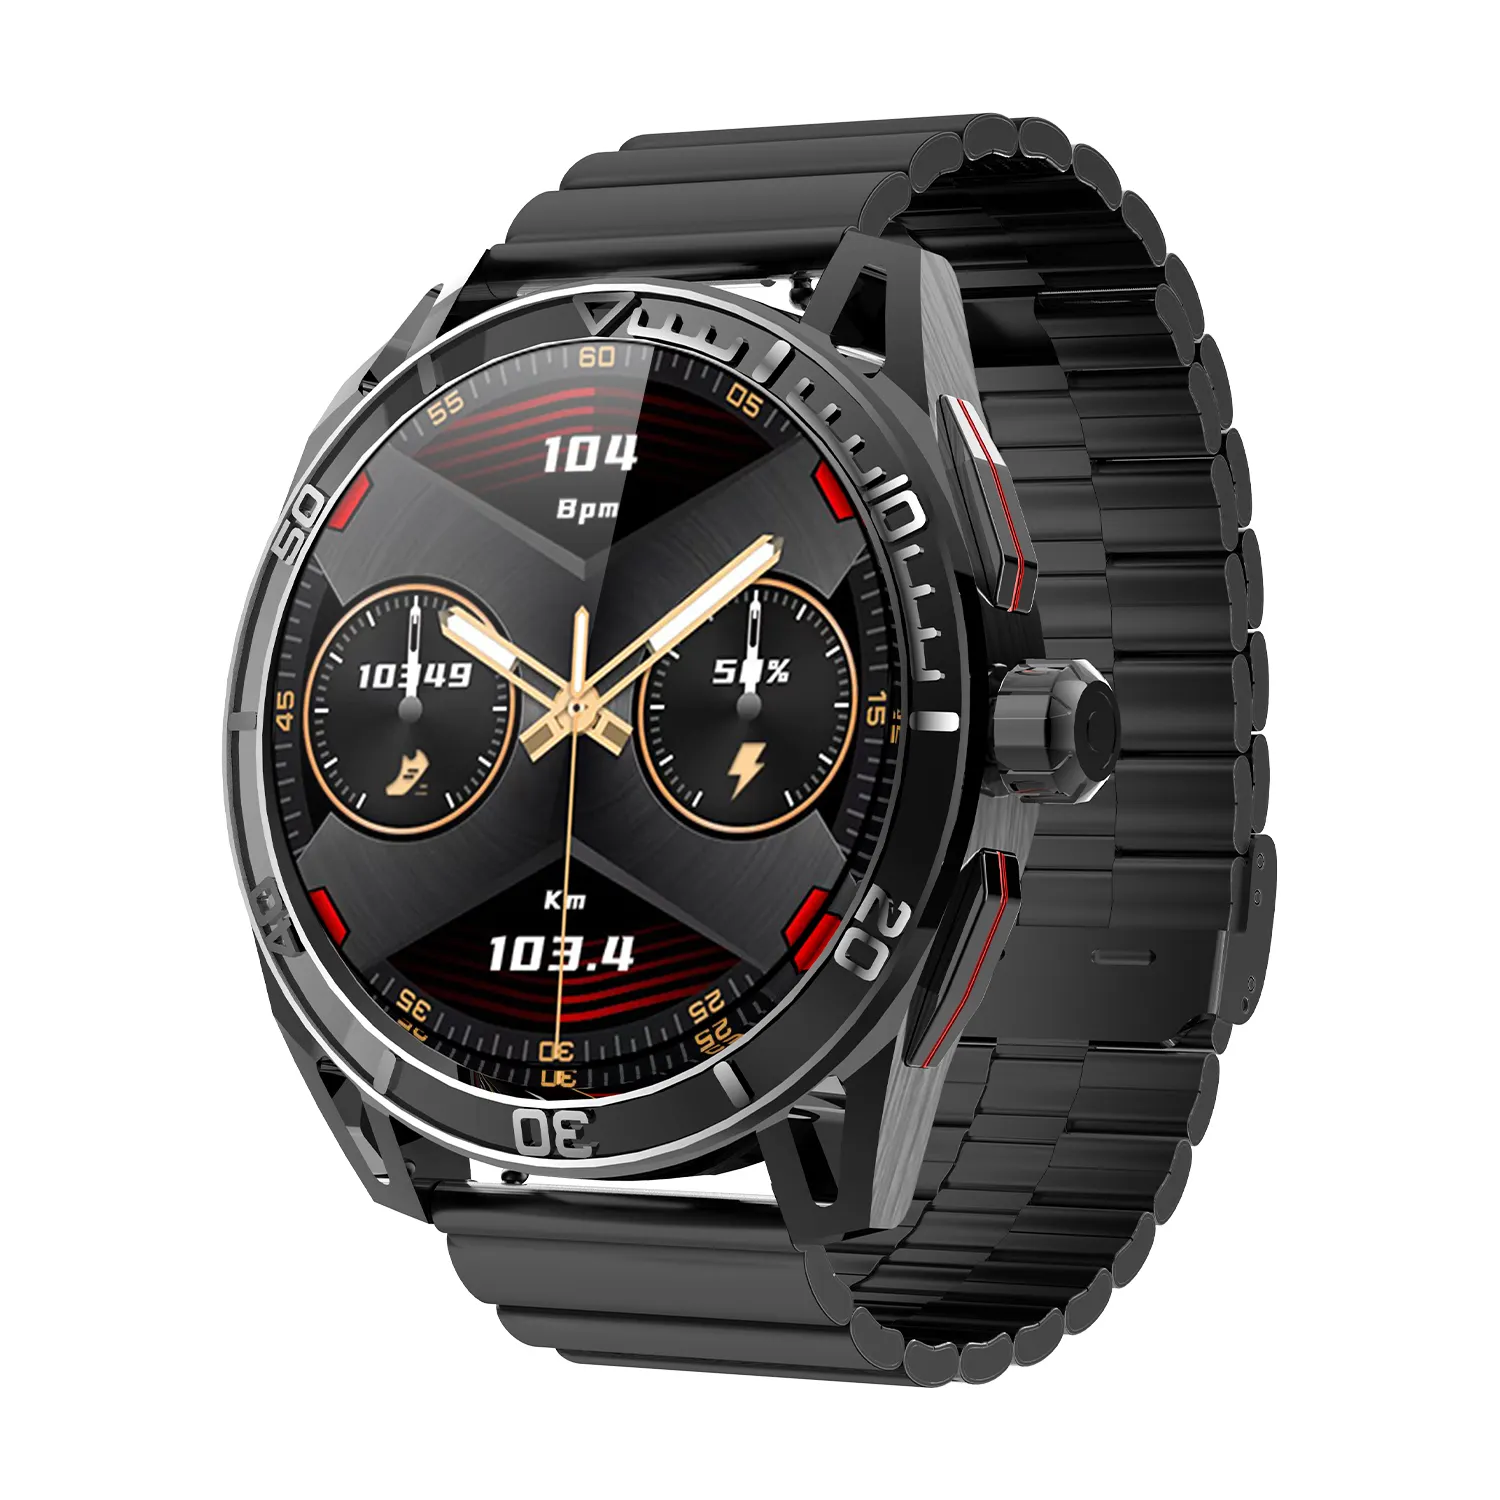 Smart Watch Hd30 Ip68 Waterproof Nfc Real Time Monitoring Single Core Dual Mode Hd Bt Calling 1.43 Inch Round Screen